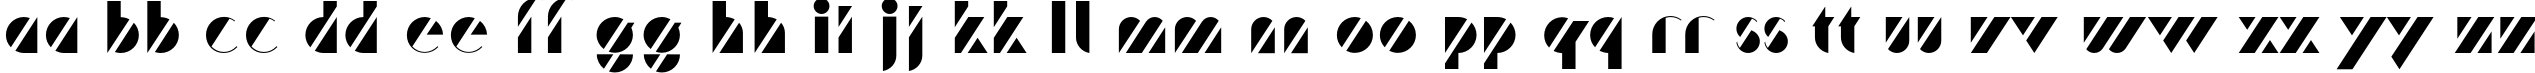 Пример написания английского алфавита шрифтом Trafaret